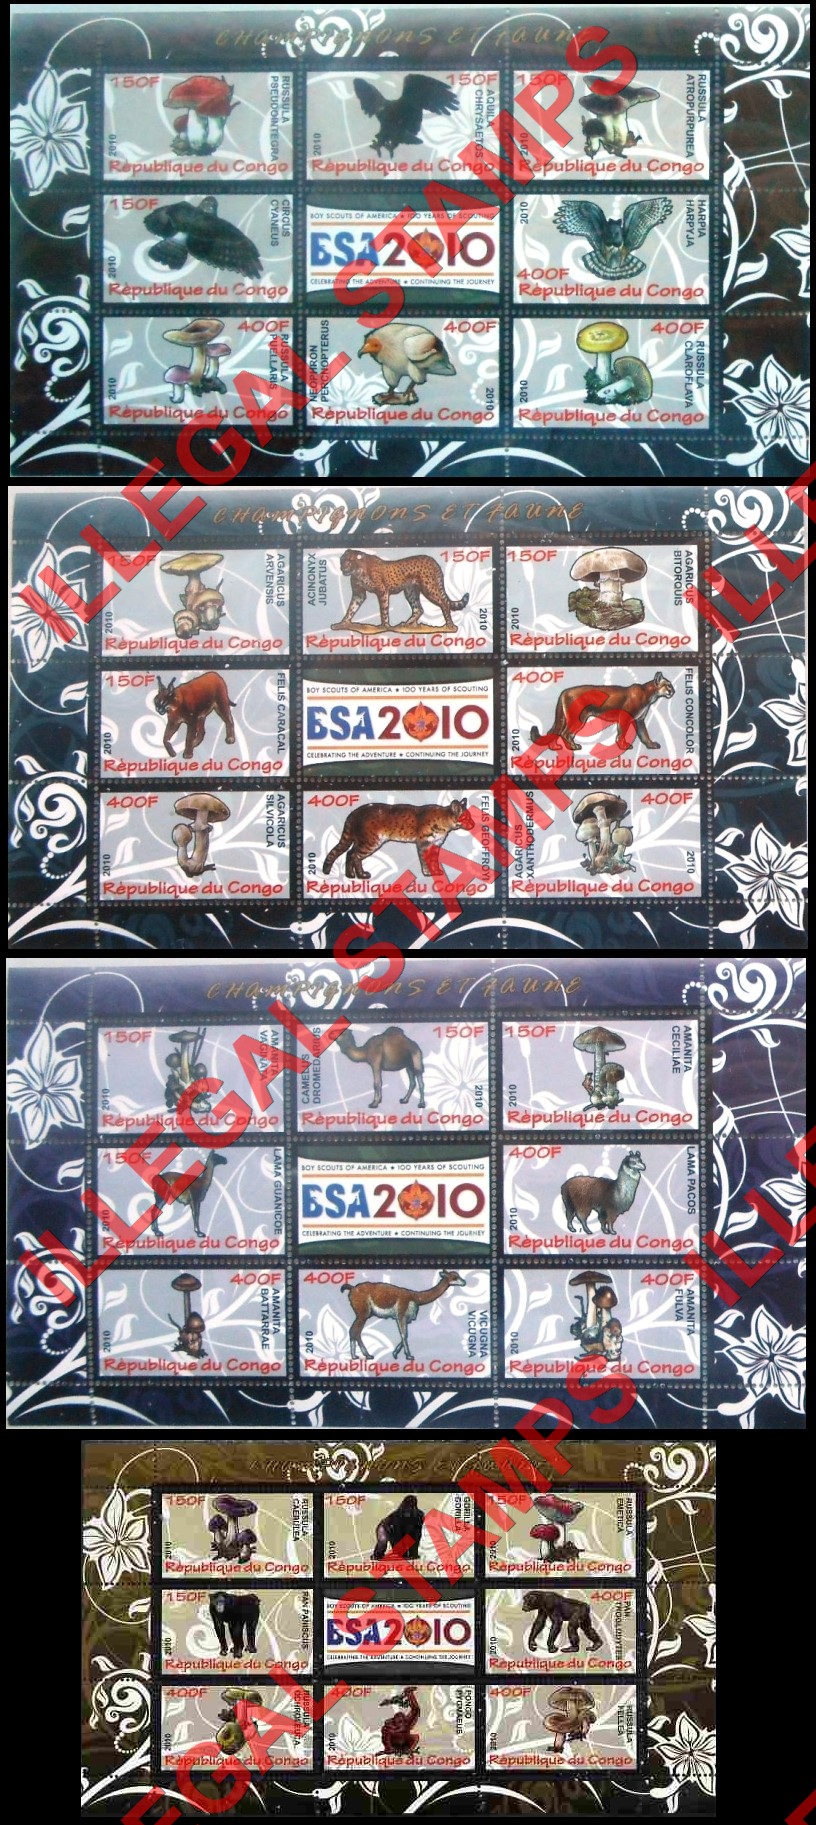 Congo Republic 2010 Mushrooms and Fauna Illegal Stamp Souvenir Sheets of 8 Plus Label (Part 3)